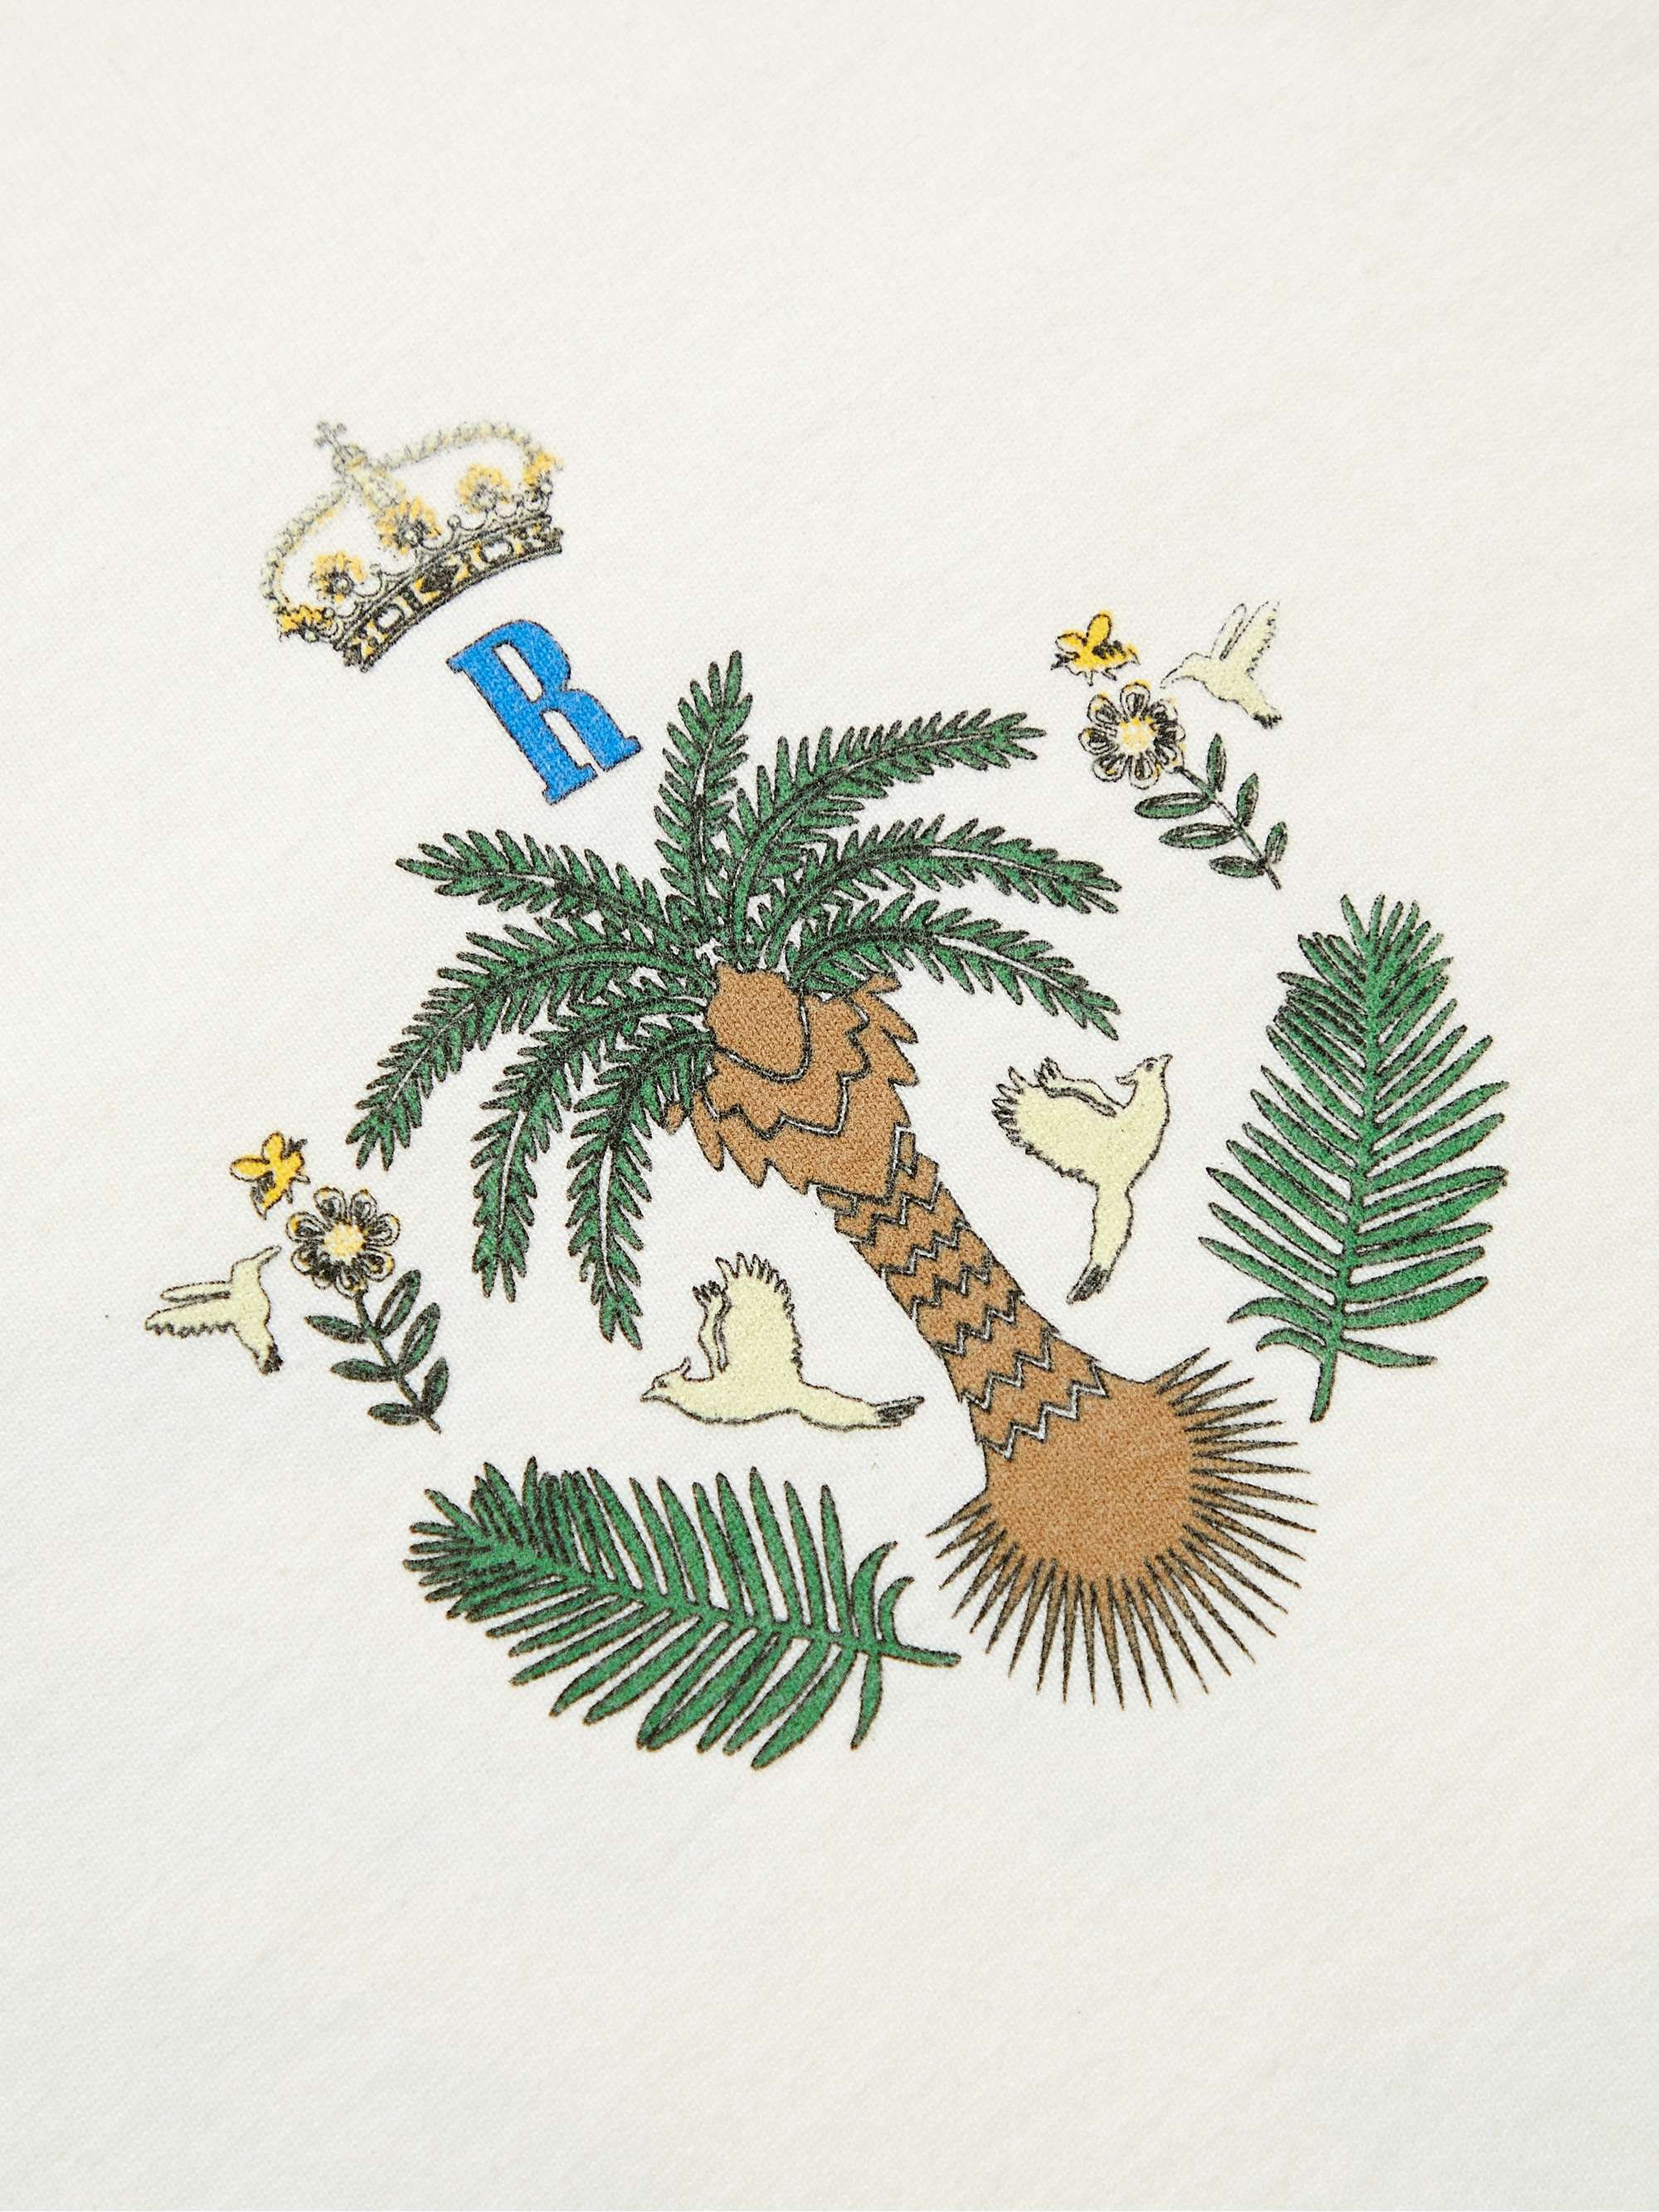 RHUDE Las Palmas Logo-Print Cotton-Jersey T-Shirt